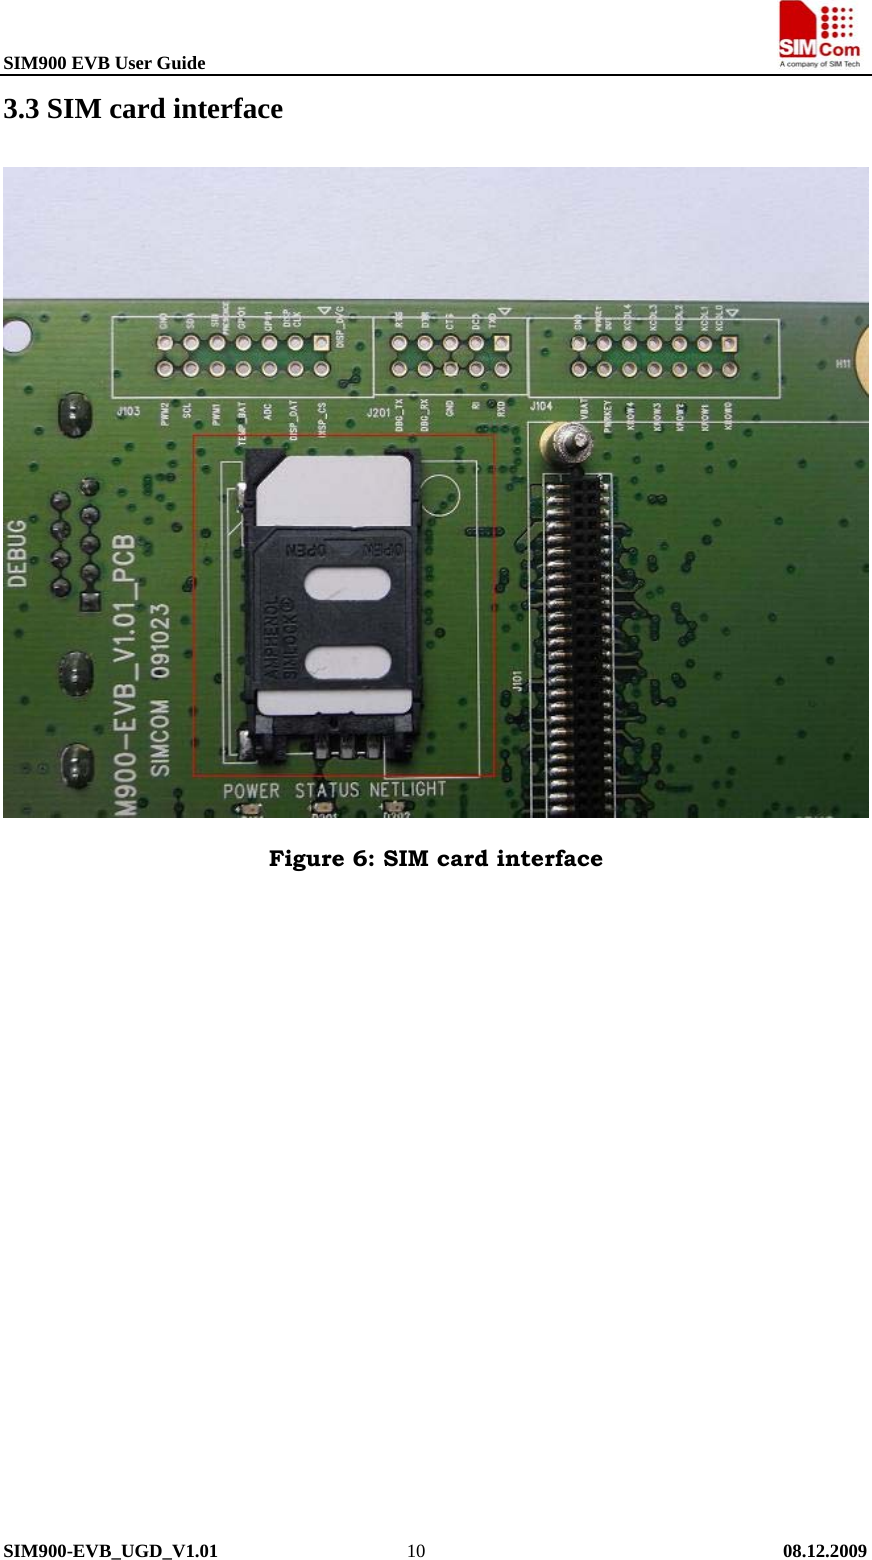 SIM900 EVB User Guide                                                                       SIM900-EVB_UGD_V1.01                    10                                      08.12.2009 3.3 SIM card interface  Figure 6: SIM card interface  